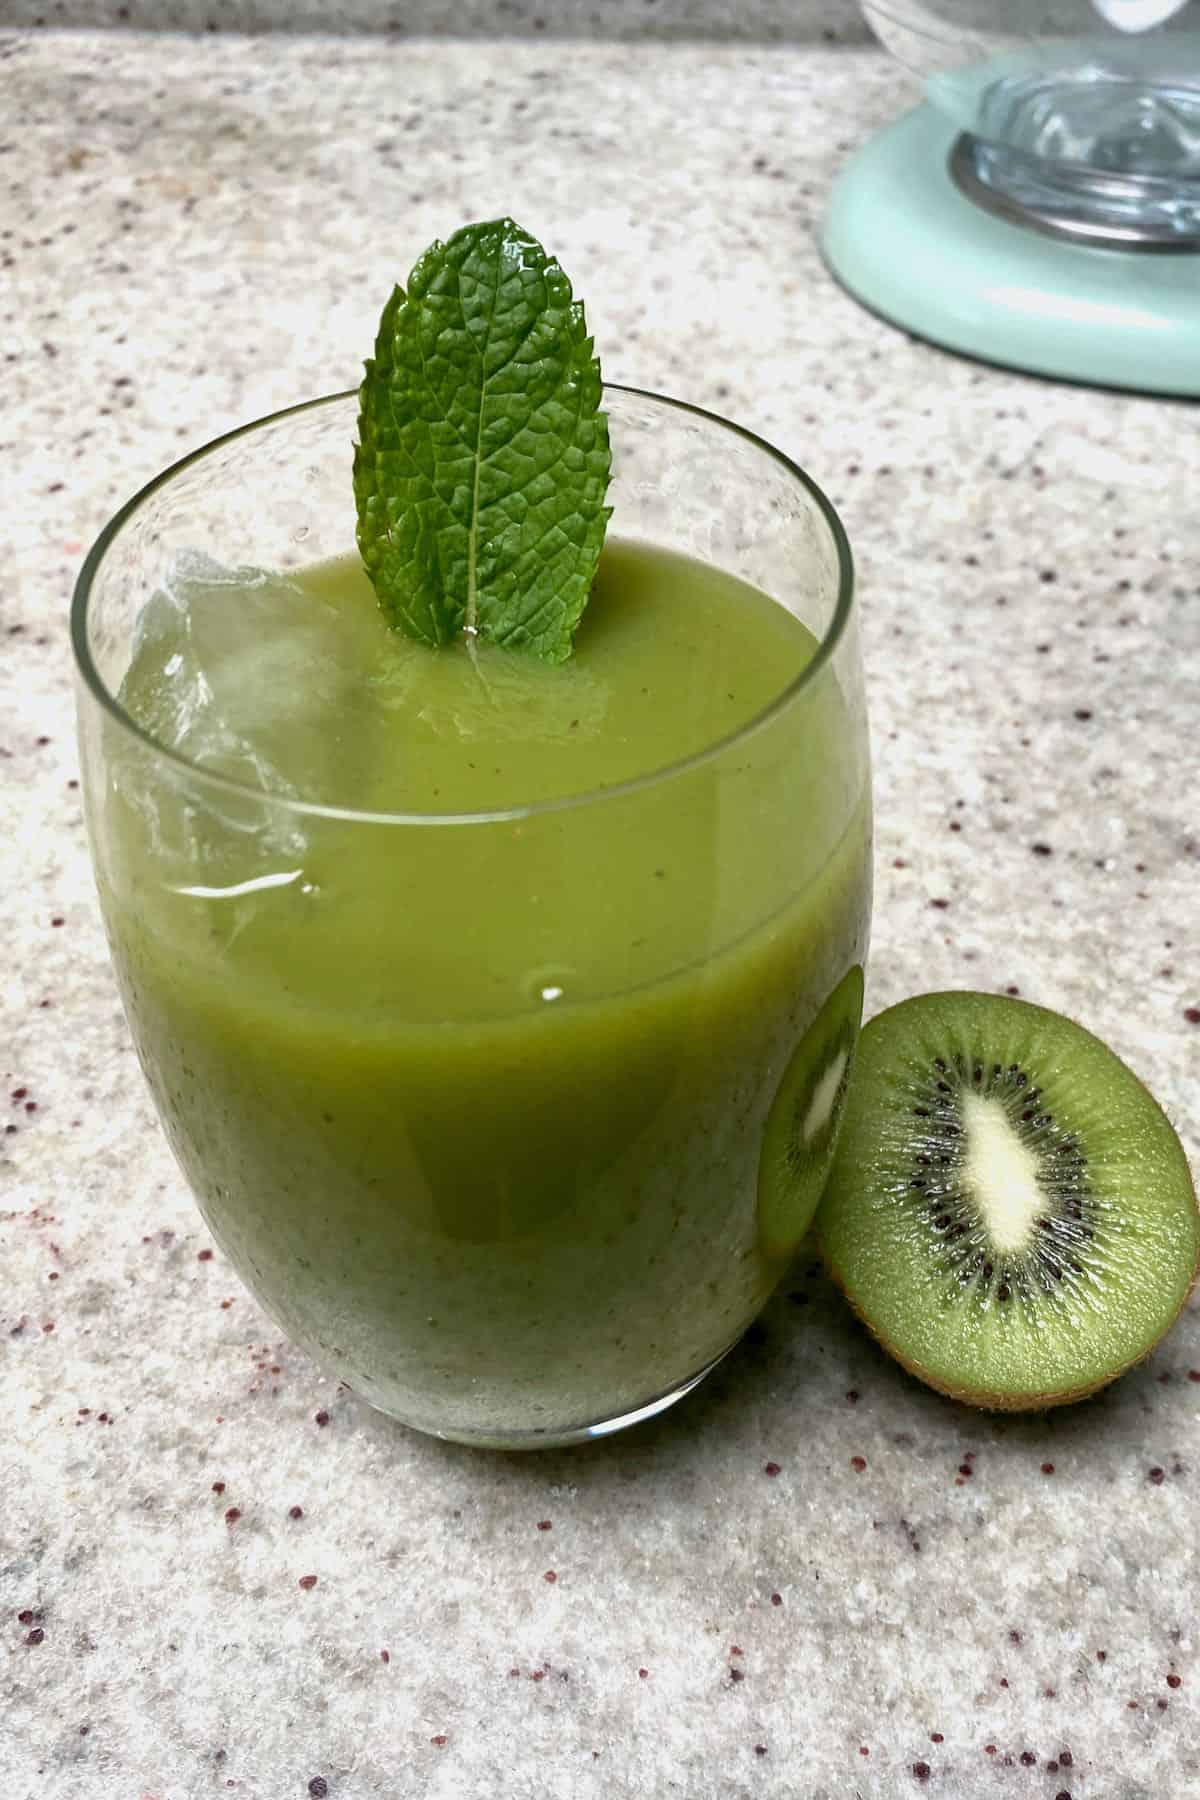 https://www.alphafoodie.com/wp-content/uploads/2021/08/Kiwi-Juice-A-glass-with-kiwi-juice.jpeg